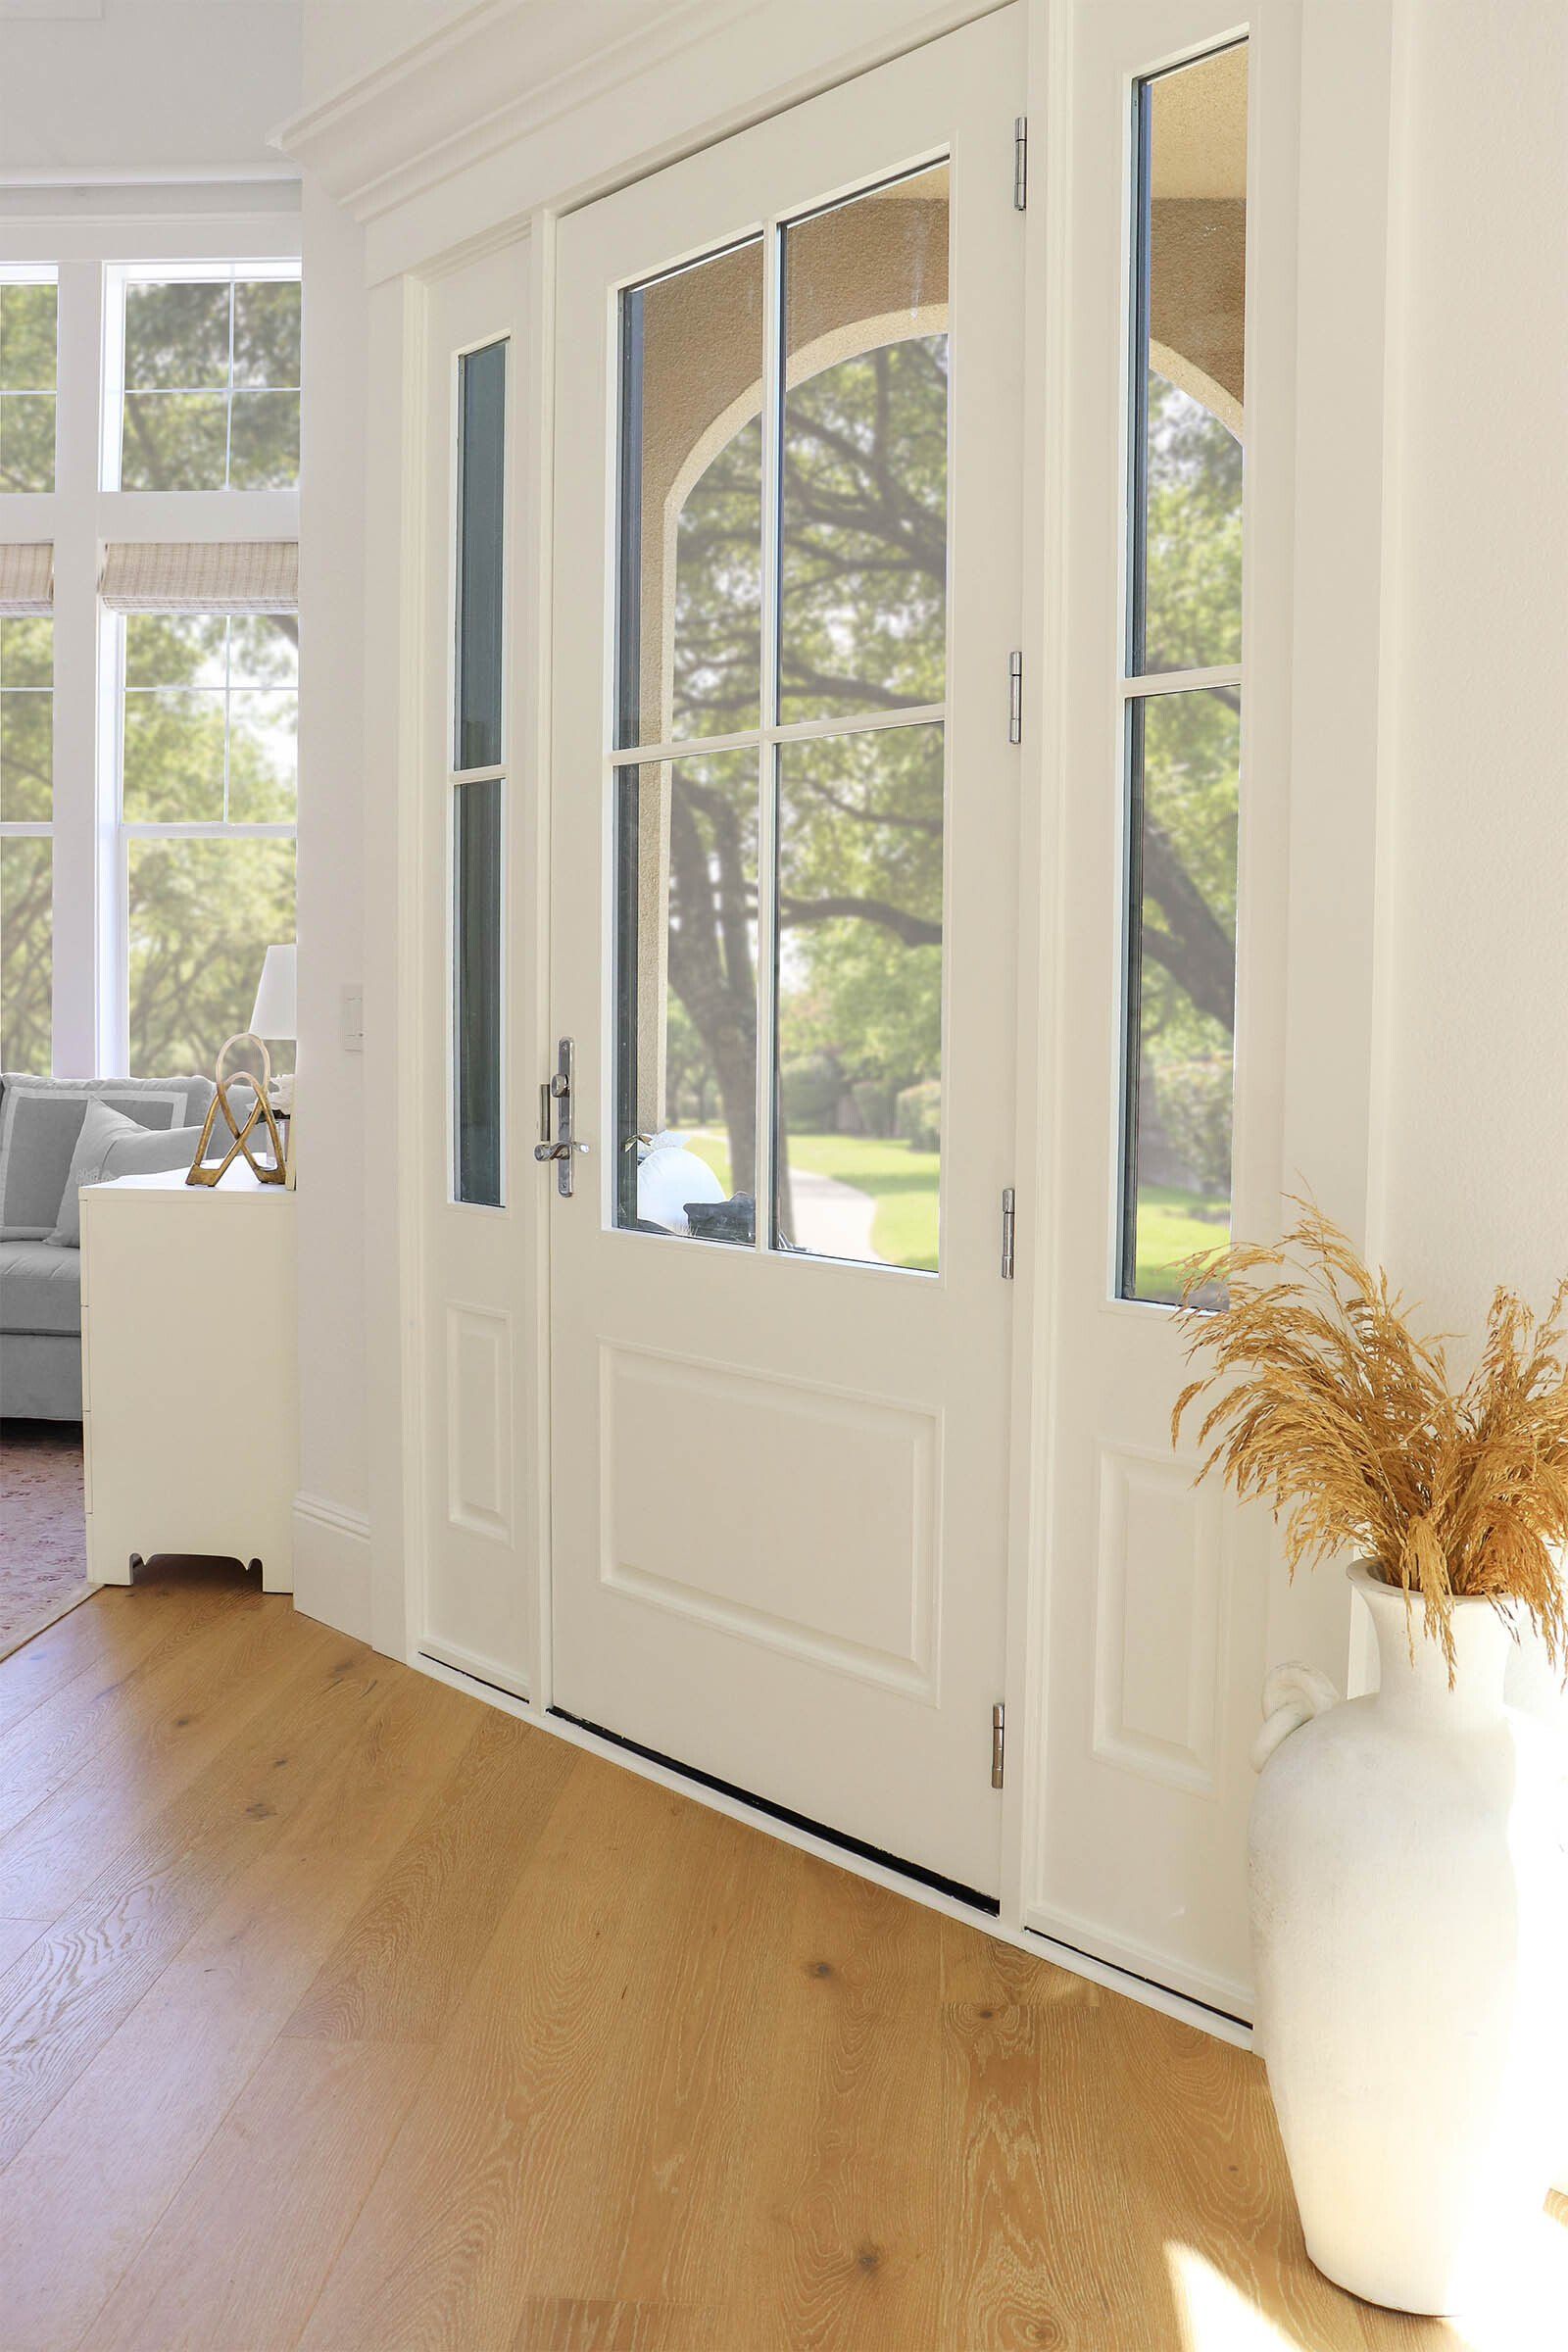 Kristy Wicks residential entry door. Photo by Andersen Windows & Doors™.